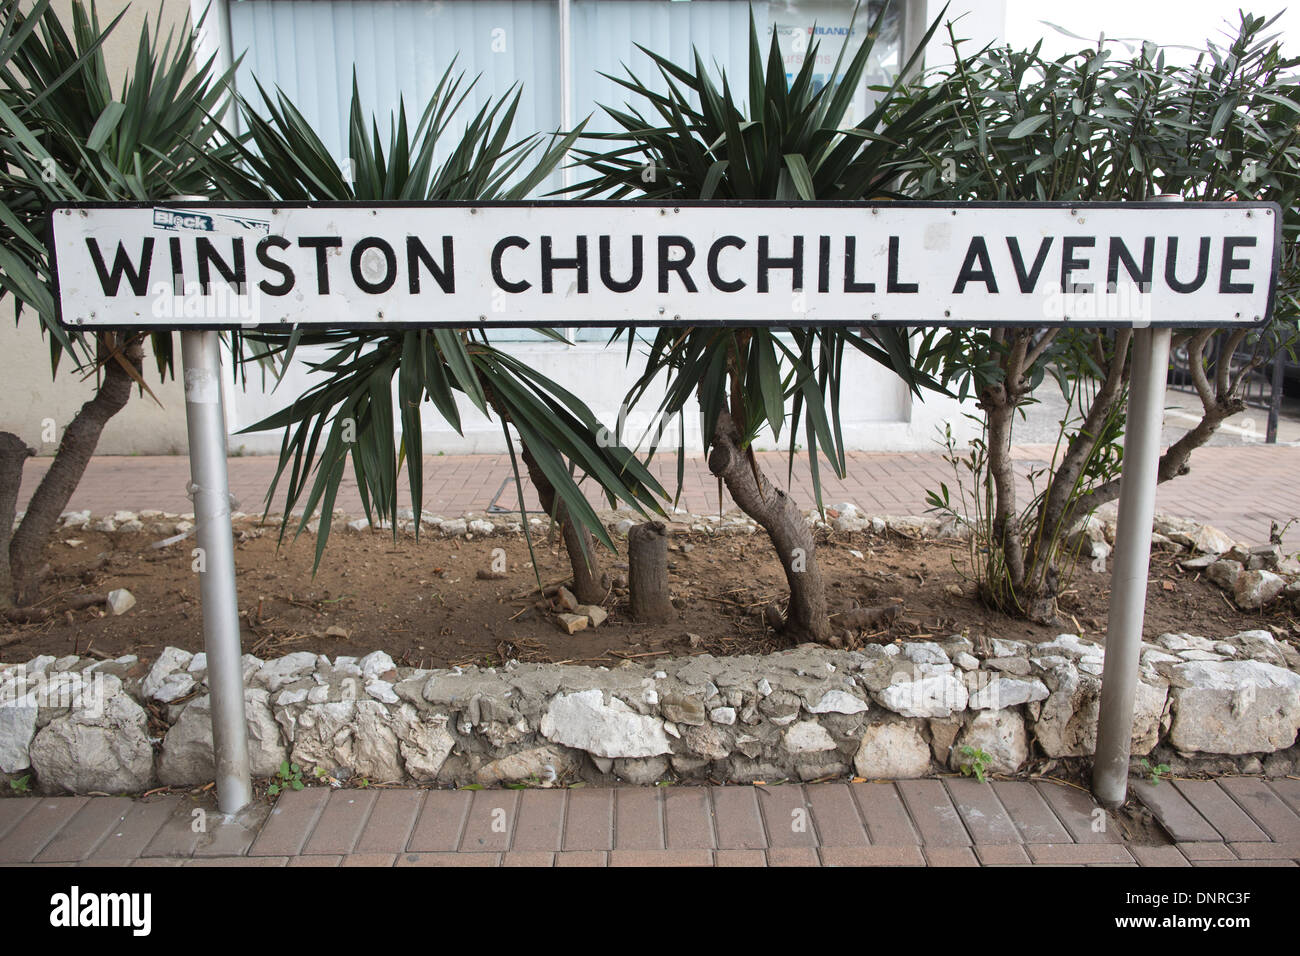 Winston Churchill Avenue, typically British street name, Gibraltar, United Kingdom Overseas Territory Stock Photo